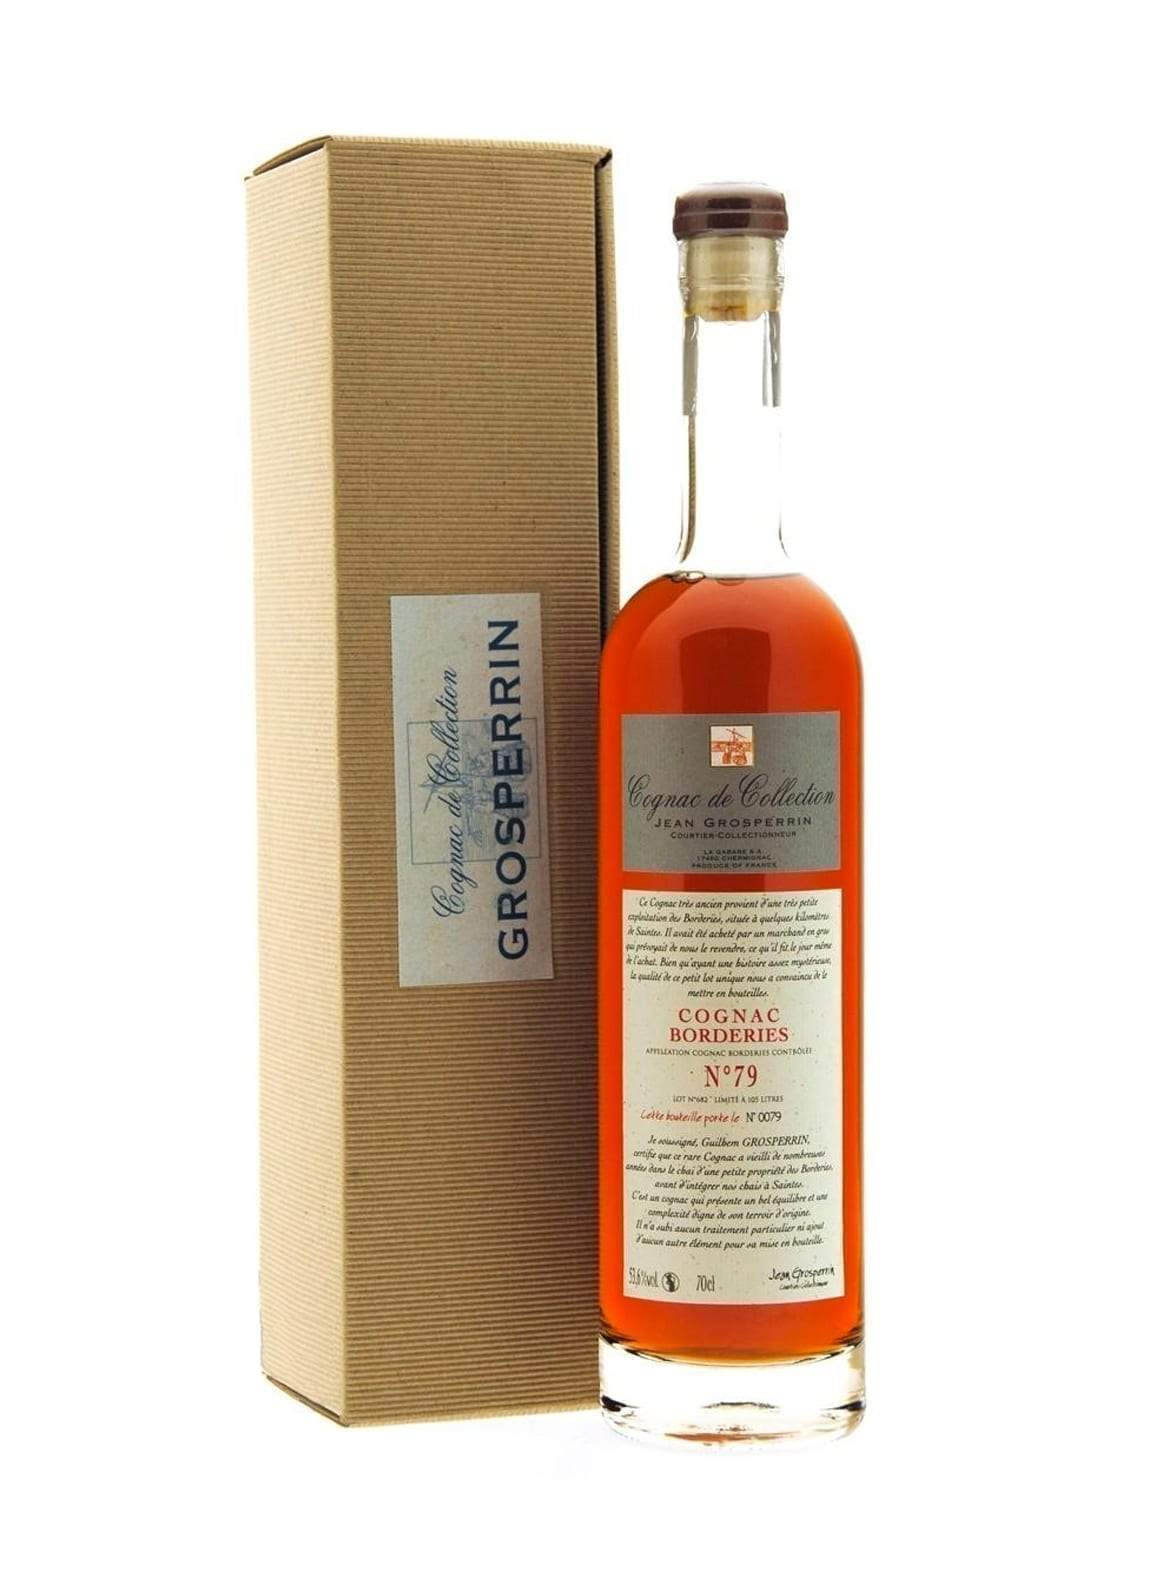 Grosperrin No.79 Borderies Cognac 53.6% 700ml | Brandy | Shop online at Spirits of France